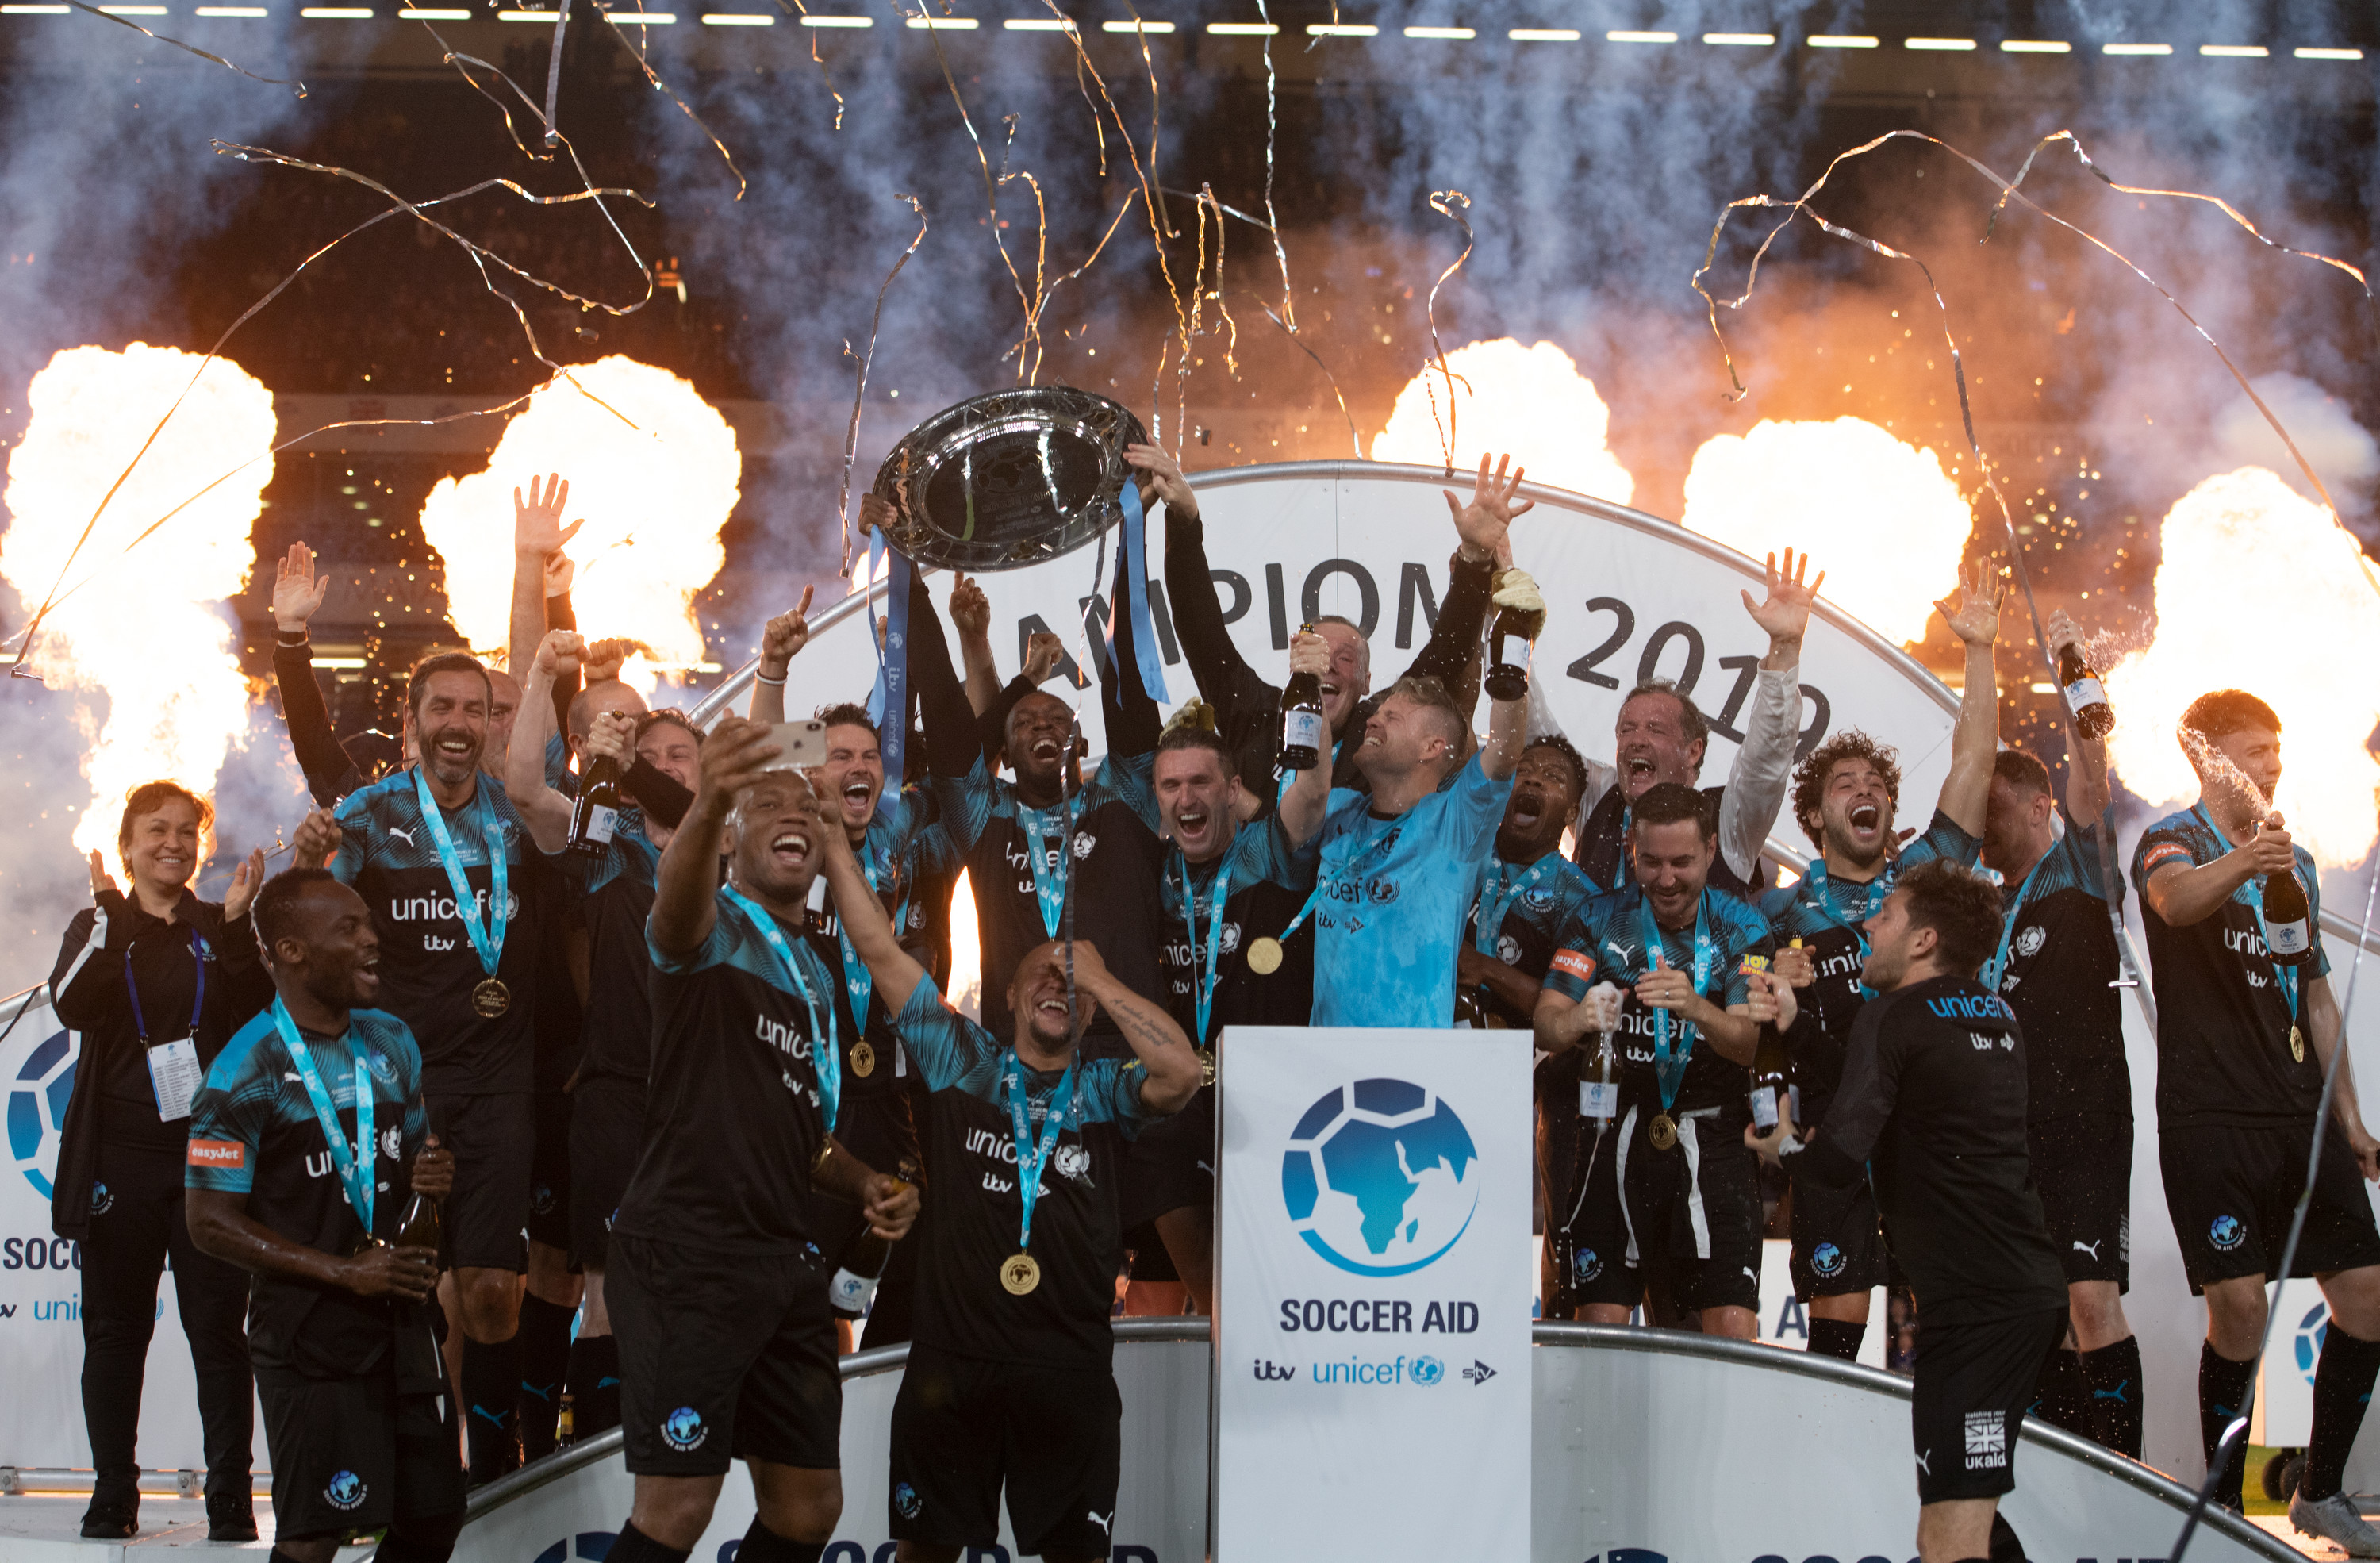 Soccer Aid World XI celebrate winning following the Soccer Aid match at Stamford Bridge last season.